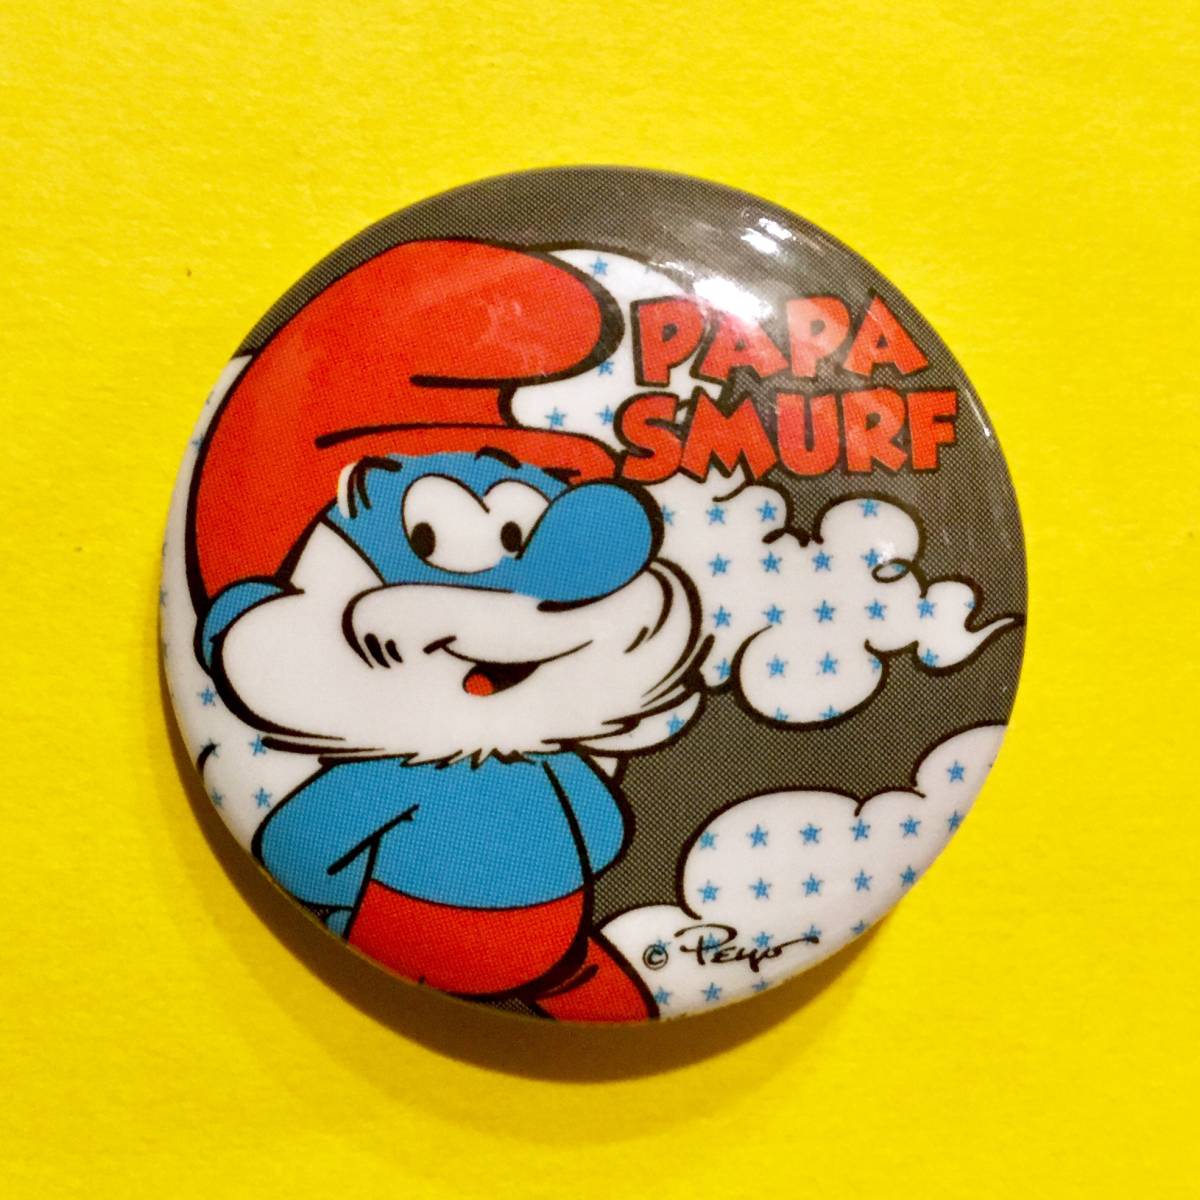 SMURFS Smurf can bachiNo. 02 Smurf .to papa Smurf b Laney Smurf can badge 